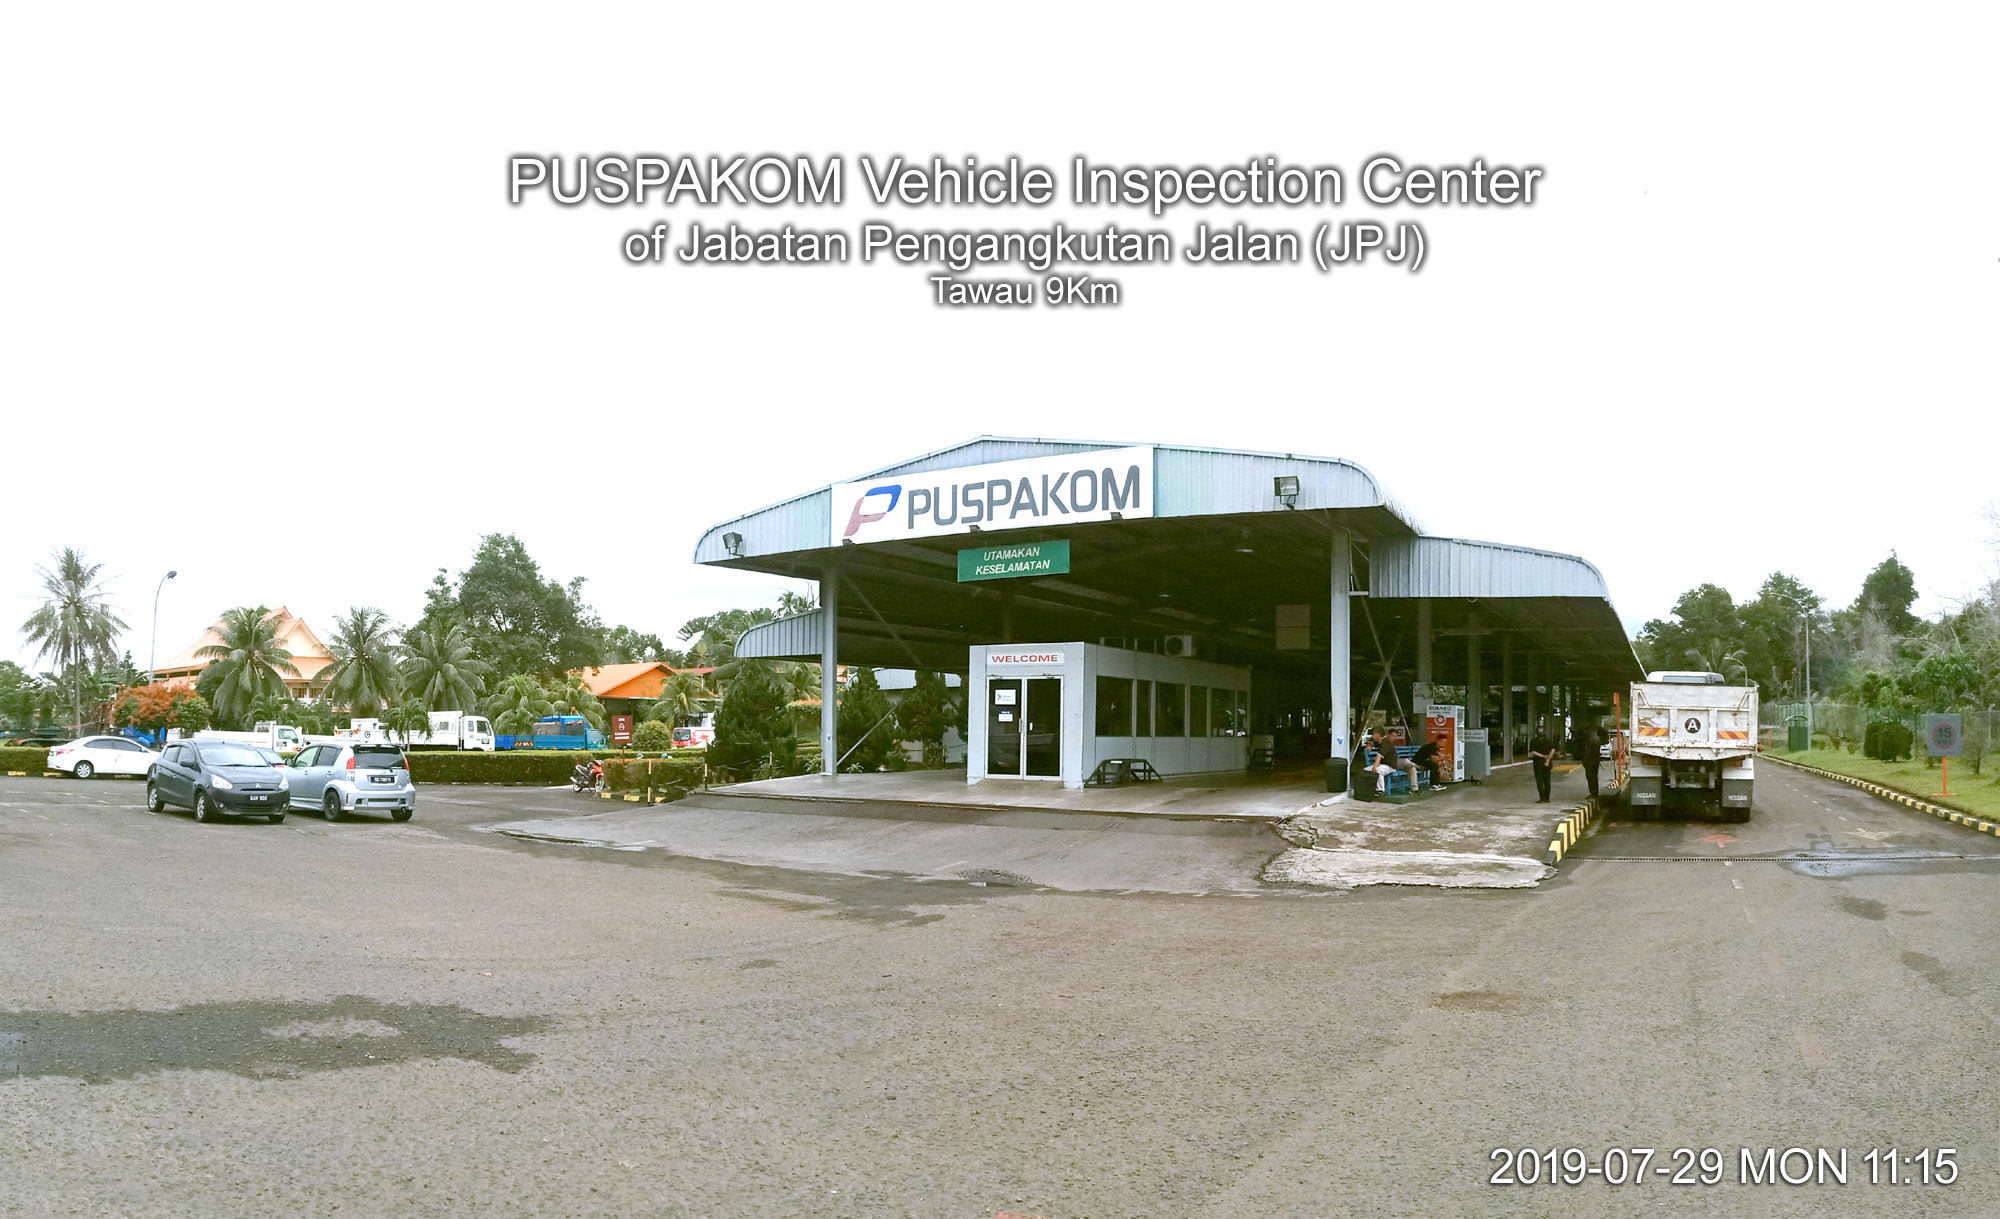 PUSPAKOM Vehicle Inspection Center